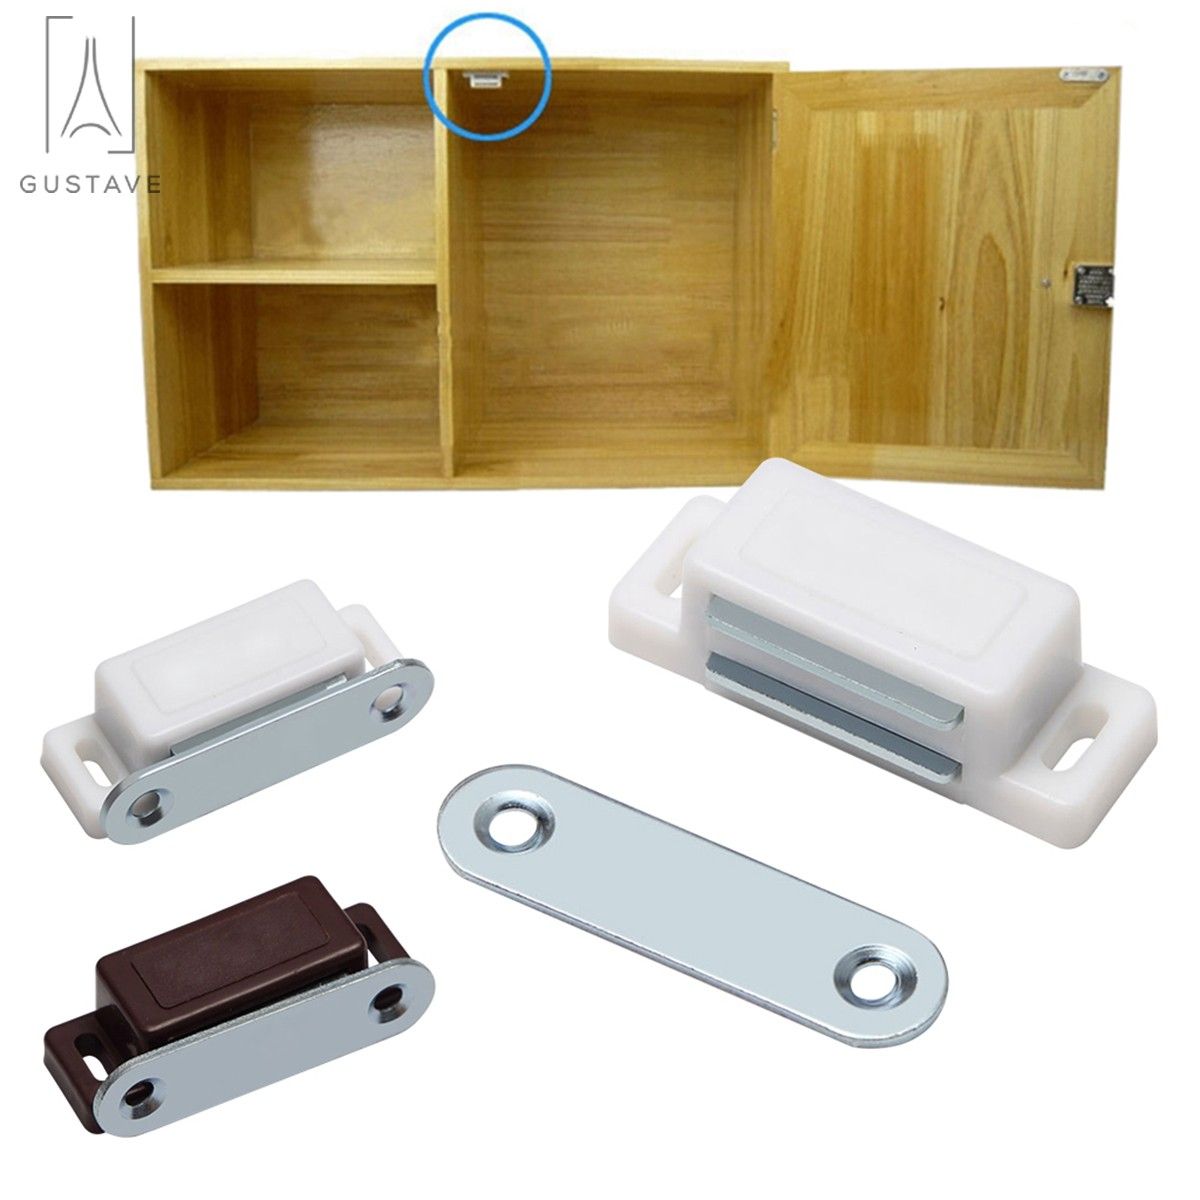 Gustave Brown Magnetic Door Catch for Kitchen Bathroom Cupboard Wardrobe Closet Closures Cabinet Door Drawer Latch (20 Pack) - image 2 of 8